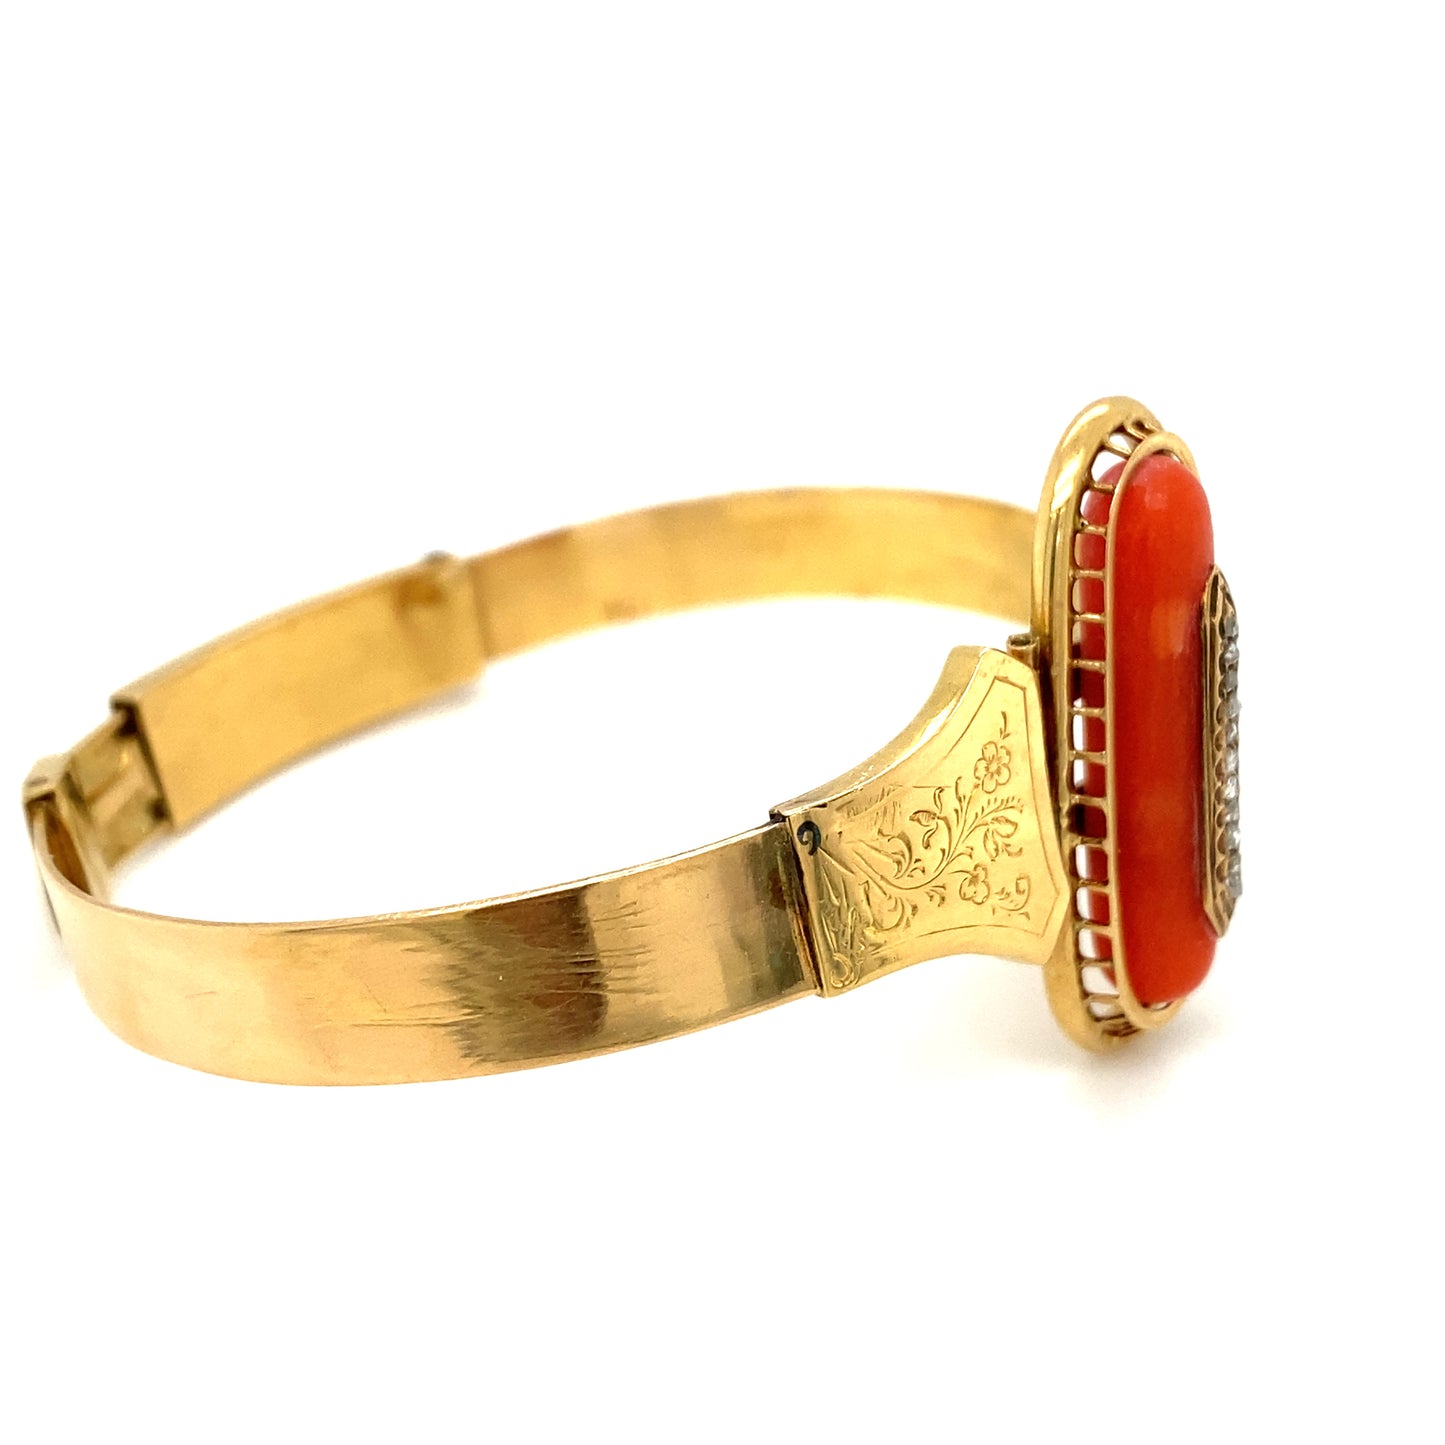 Circa 1890s Victorian Coral and Diamond Bracelet in 14K Gold